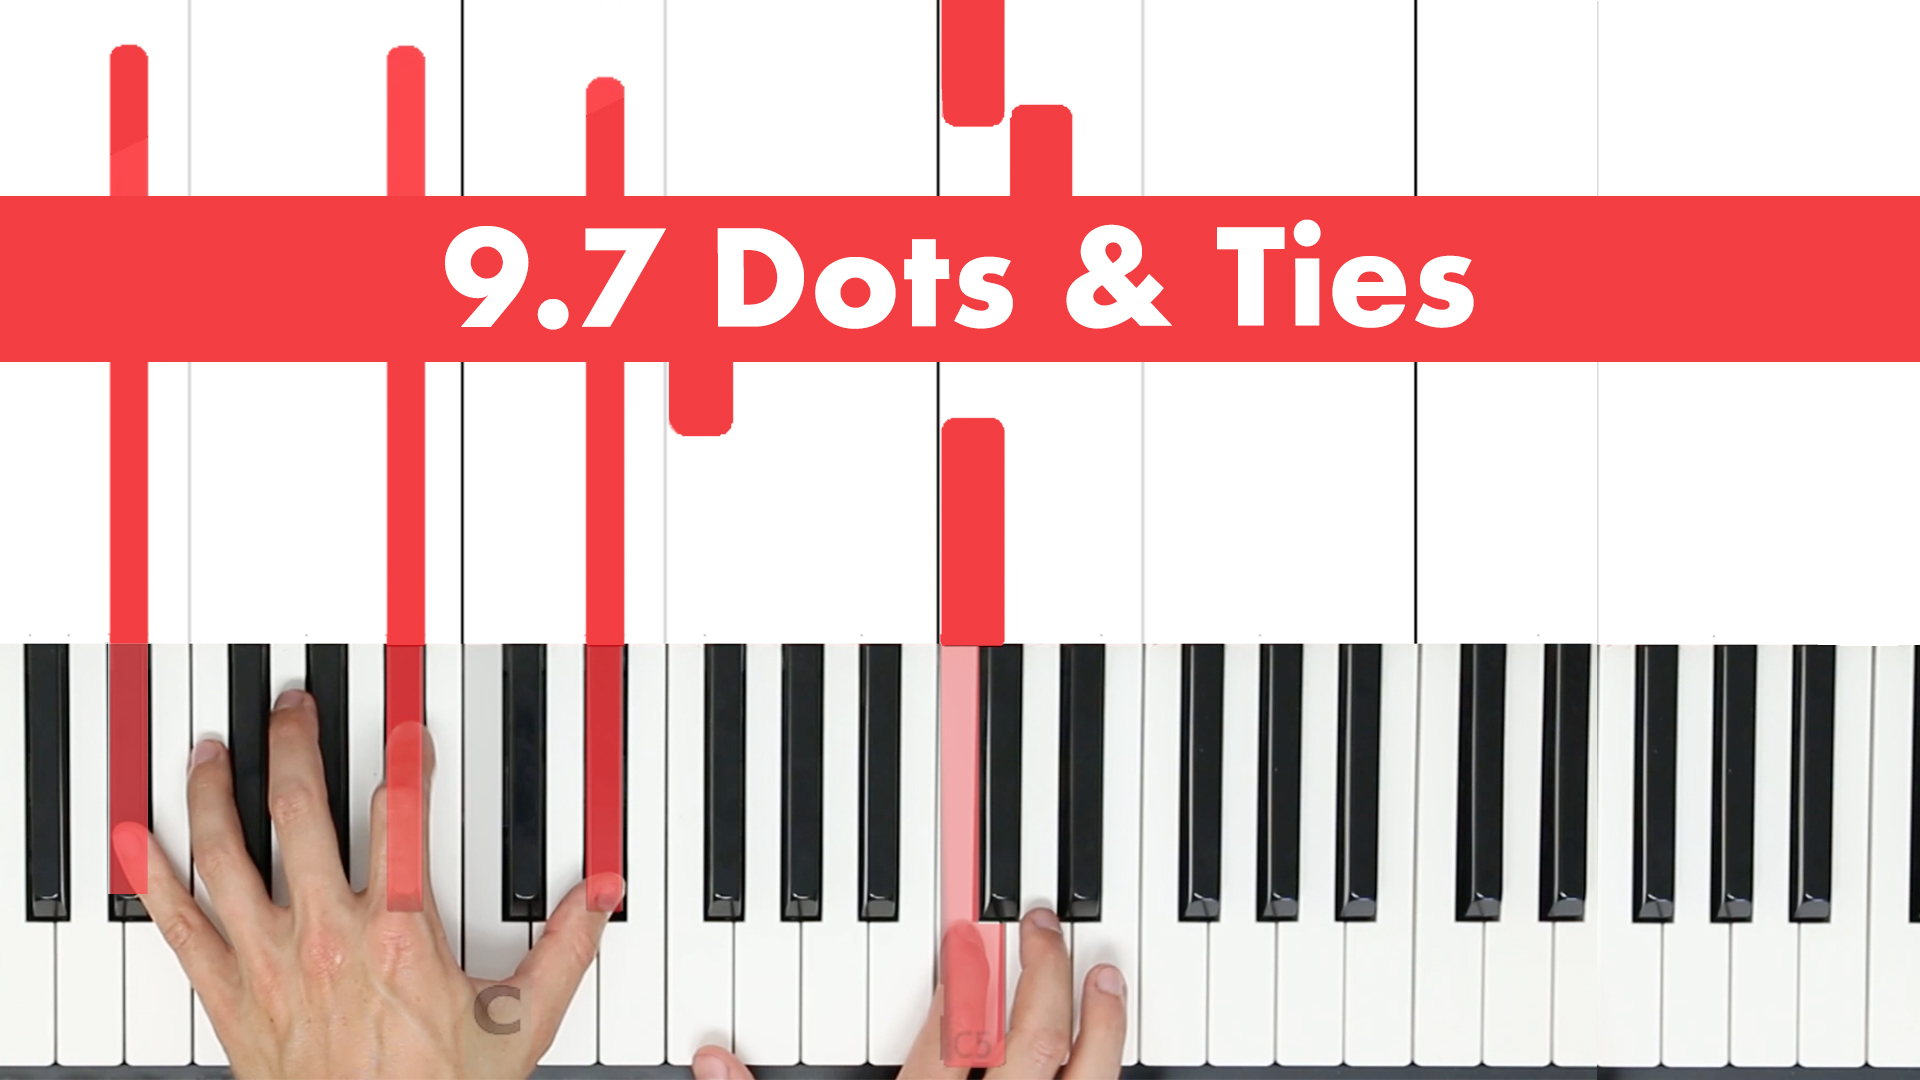 9.7 Dots & Ties